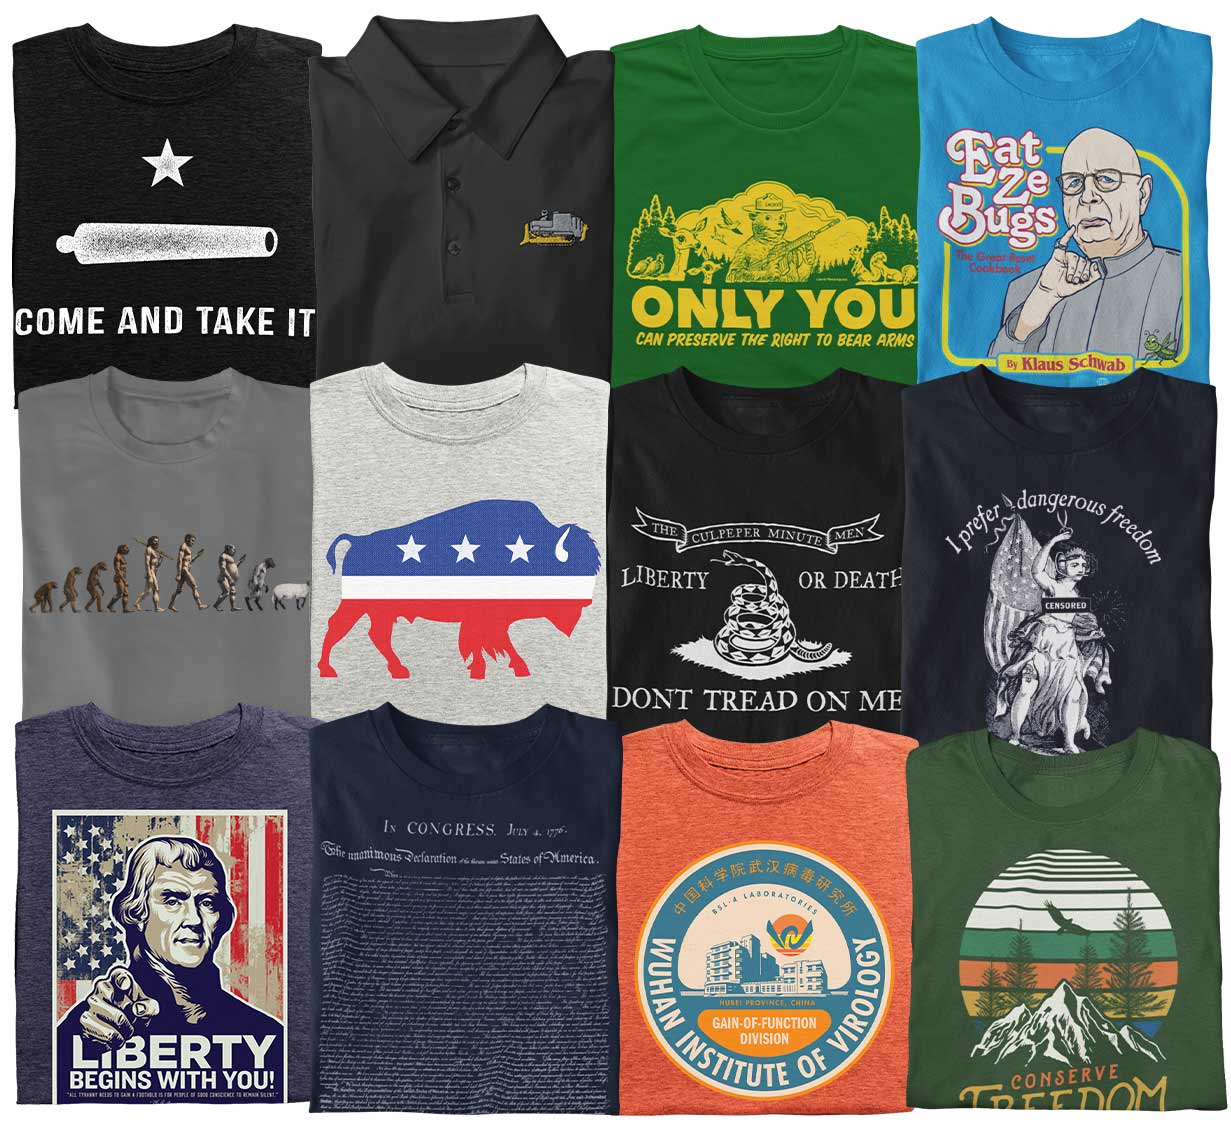 Liberty Maniacs Hawaiian Print Men's T-Shirt XL